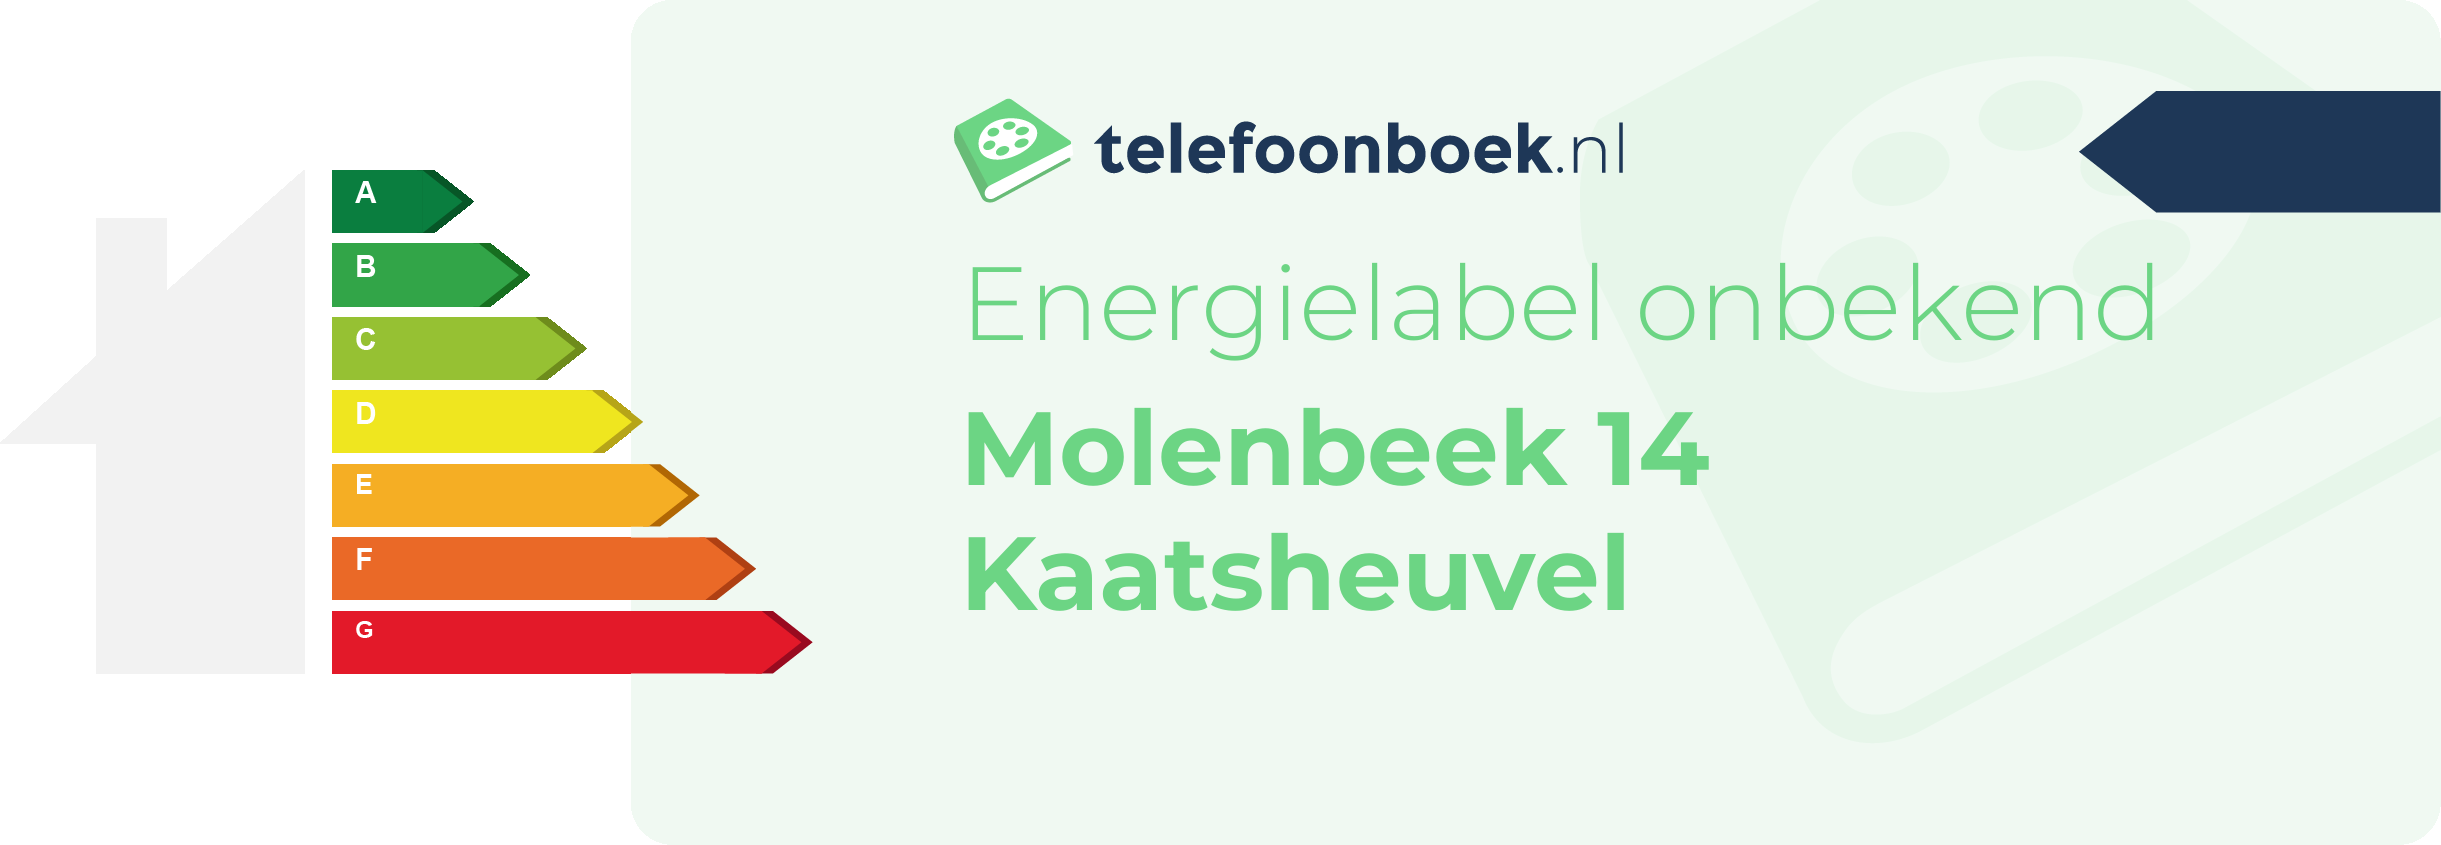 Energielabel Molenbeek 14 Kaatsheuvel